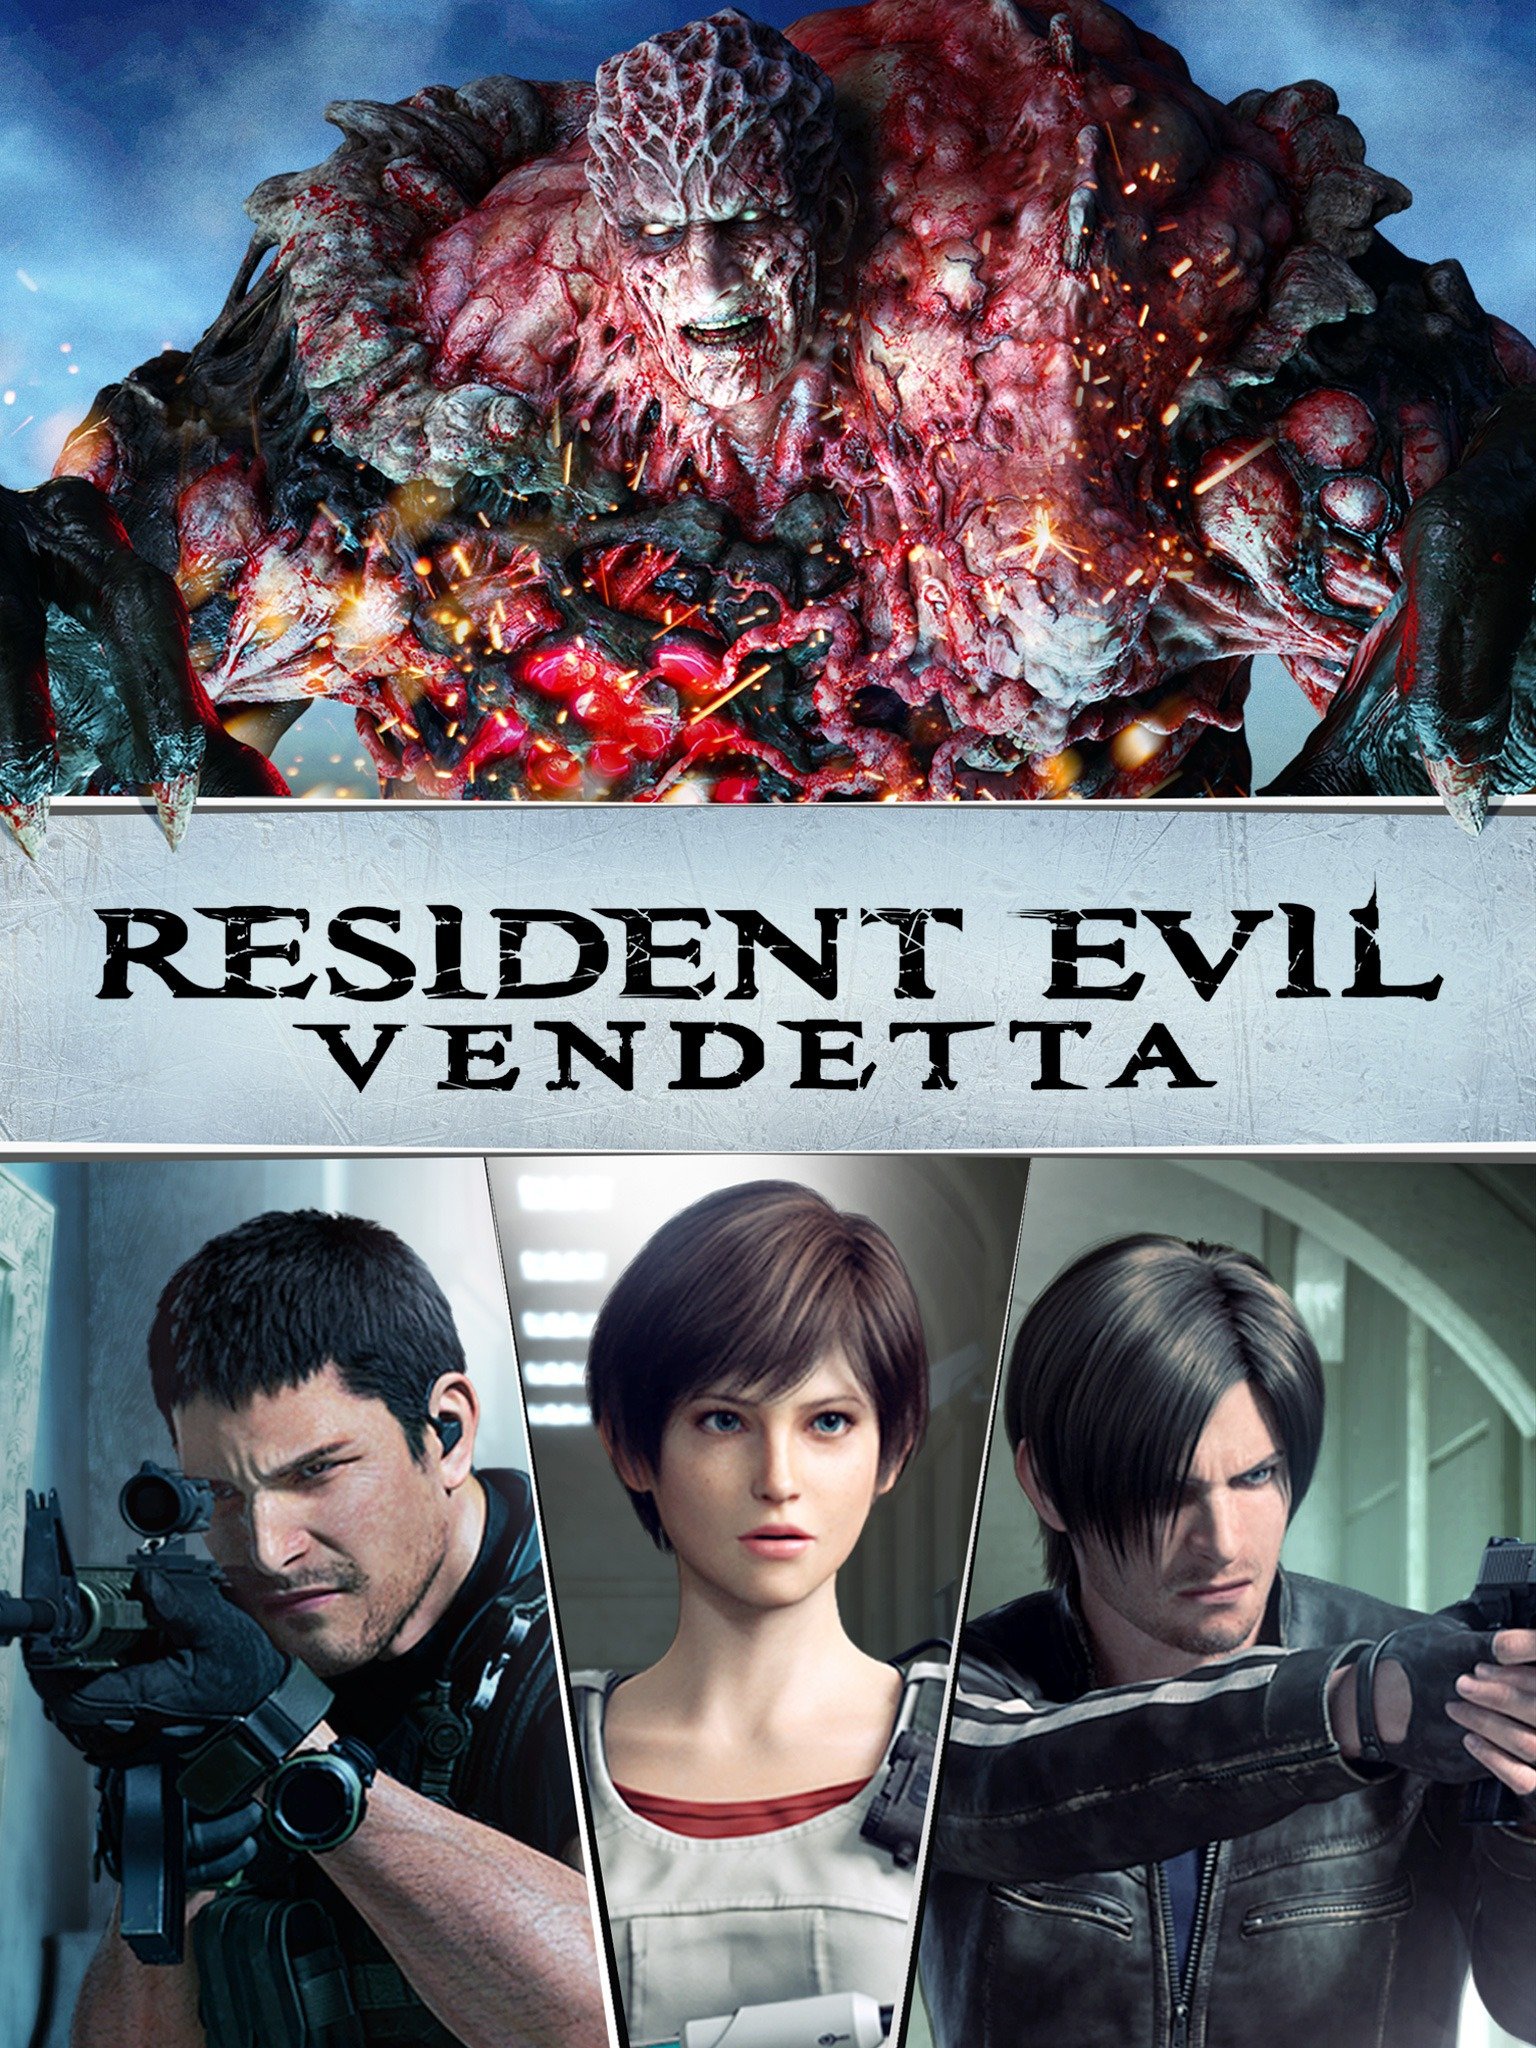 Resident Evil 4 Charming Vintage Anime Trailers Get Hilarious Episode 2   TechRaptor